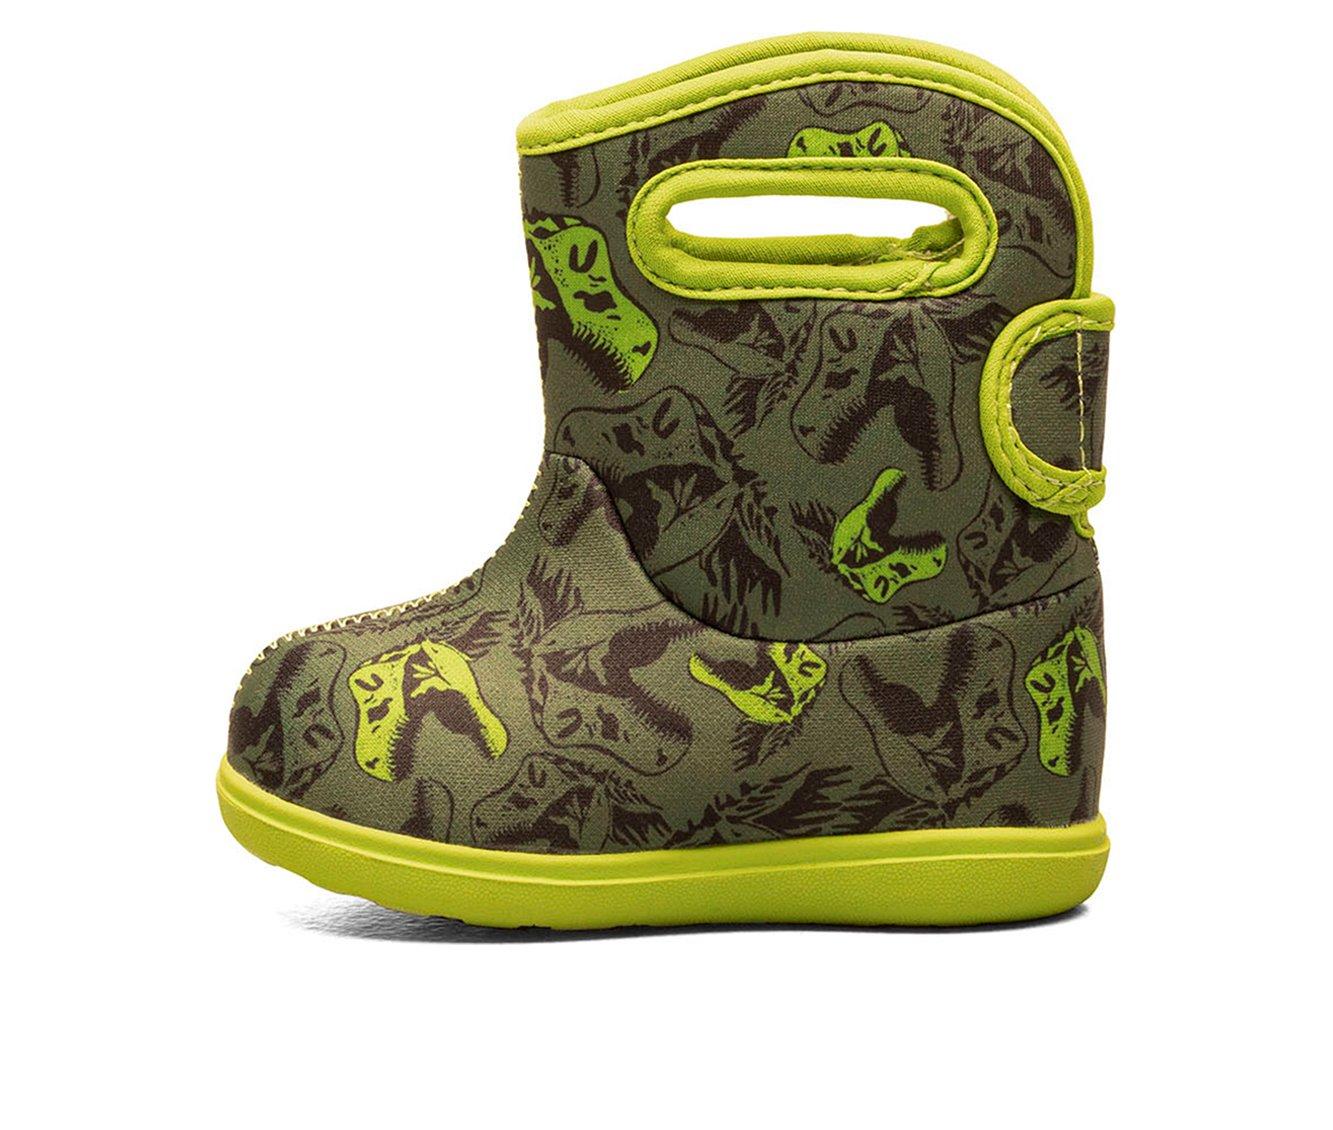 Boys' Bogs Footwear Toddler Baby Bogs II Dino Rain Boots